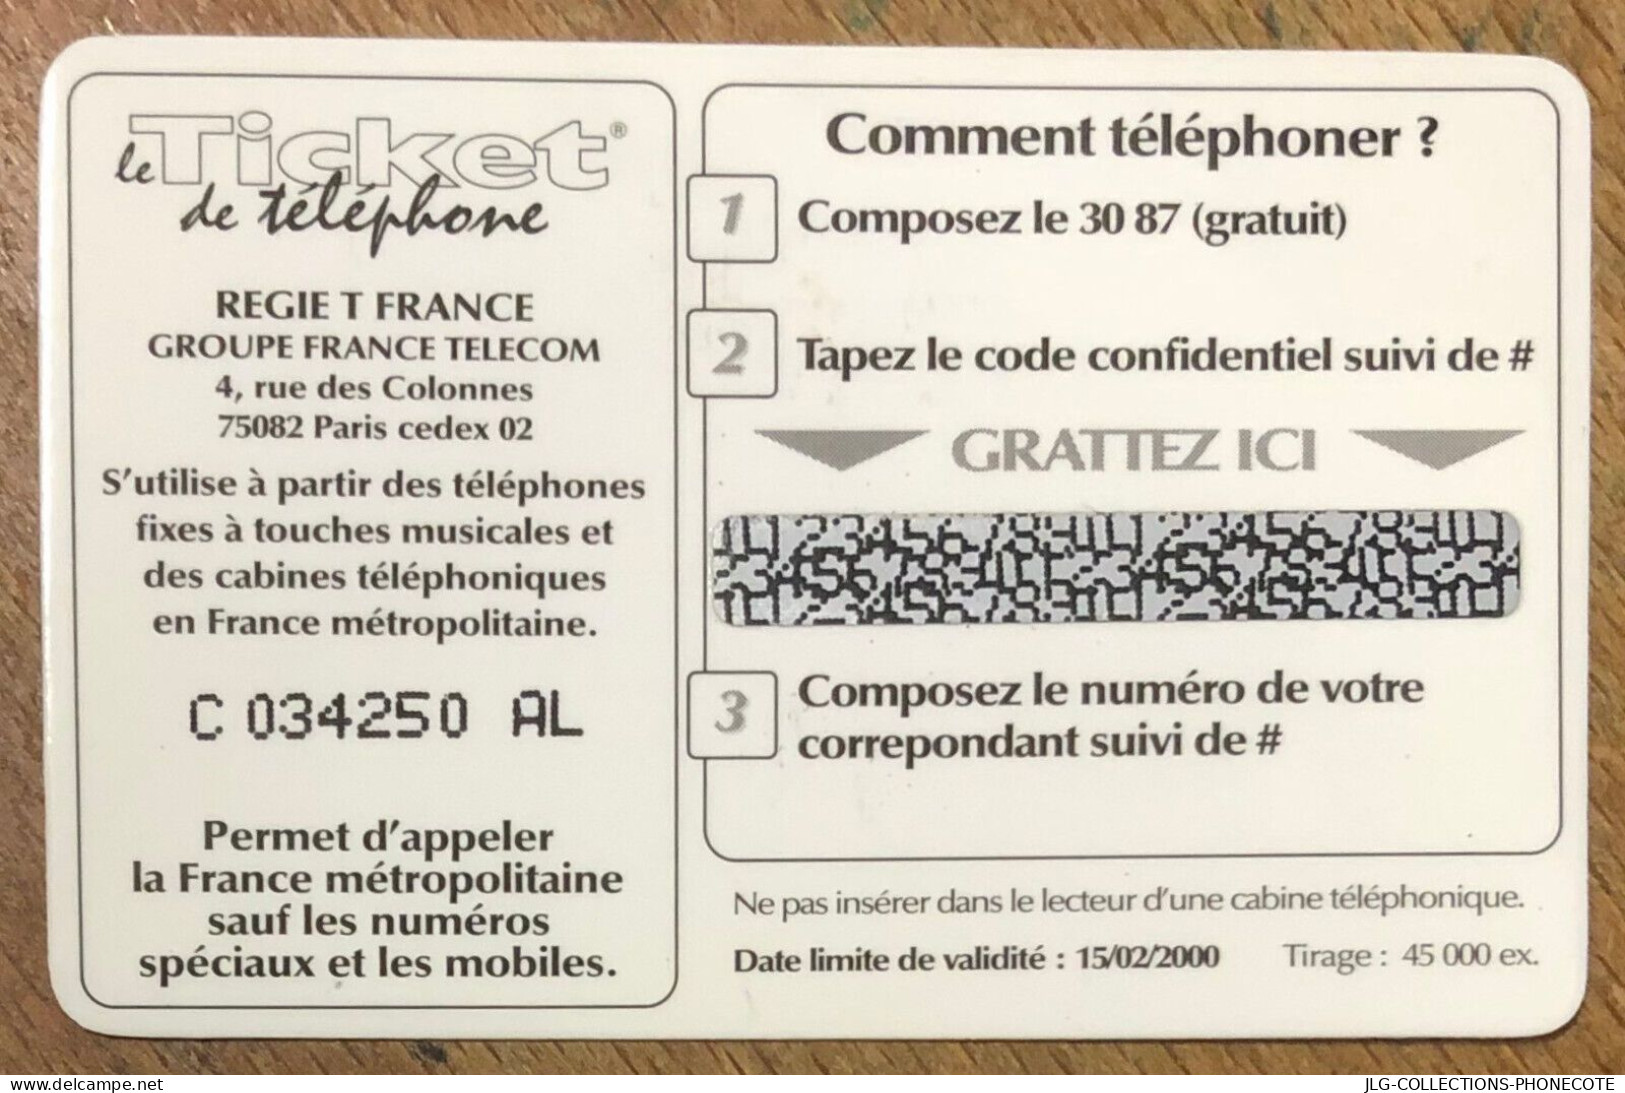 TICKET TÉLÉPHONE FRANCE TÉLÉCOM FILLETTE NEUF PREPAID PREPAYÉE CALLING CARD TELECARTE SCHEDA PHONE CARD - FT